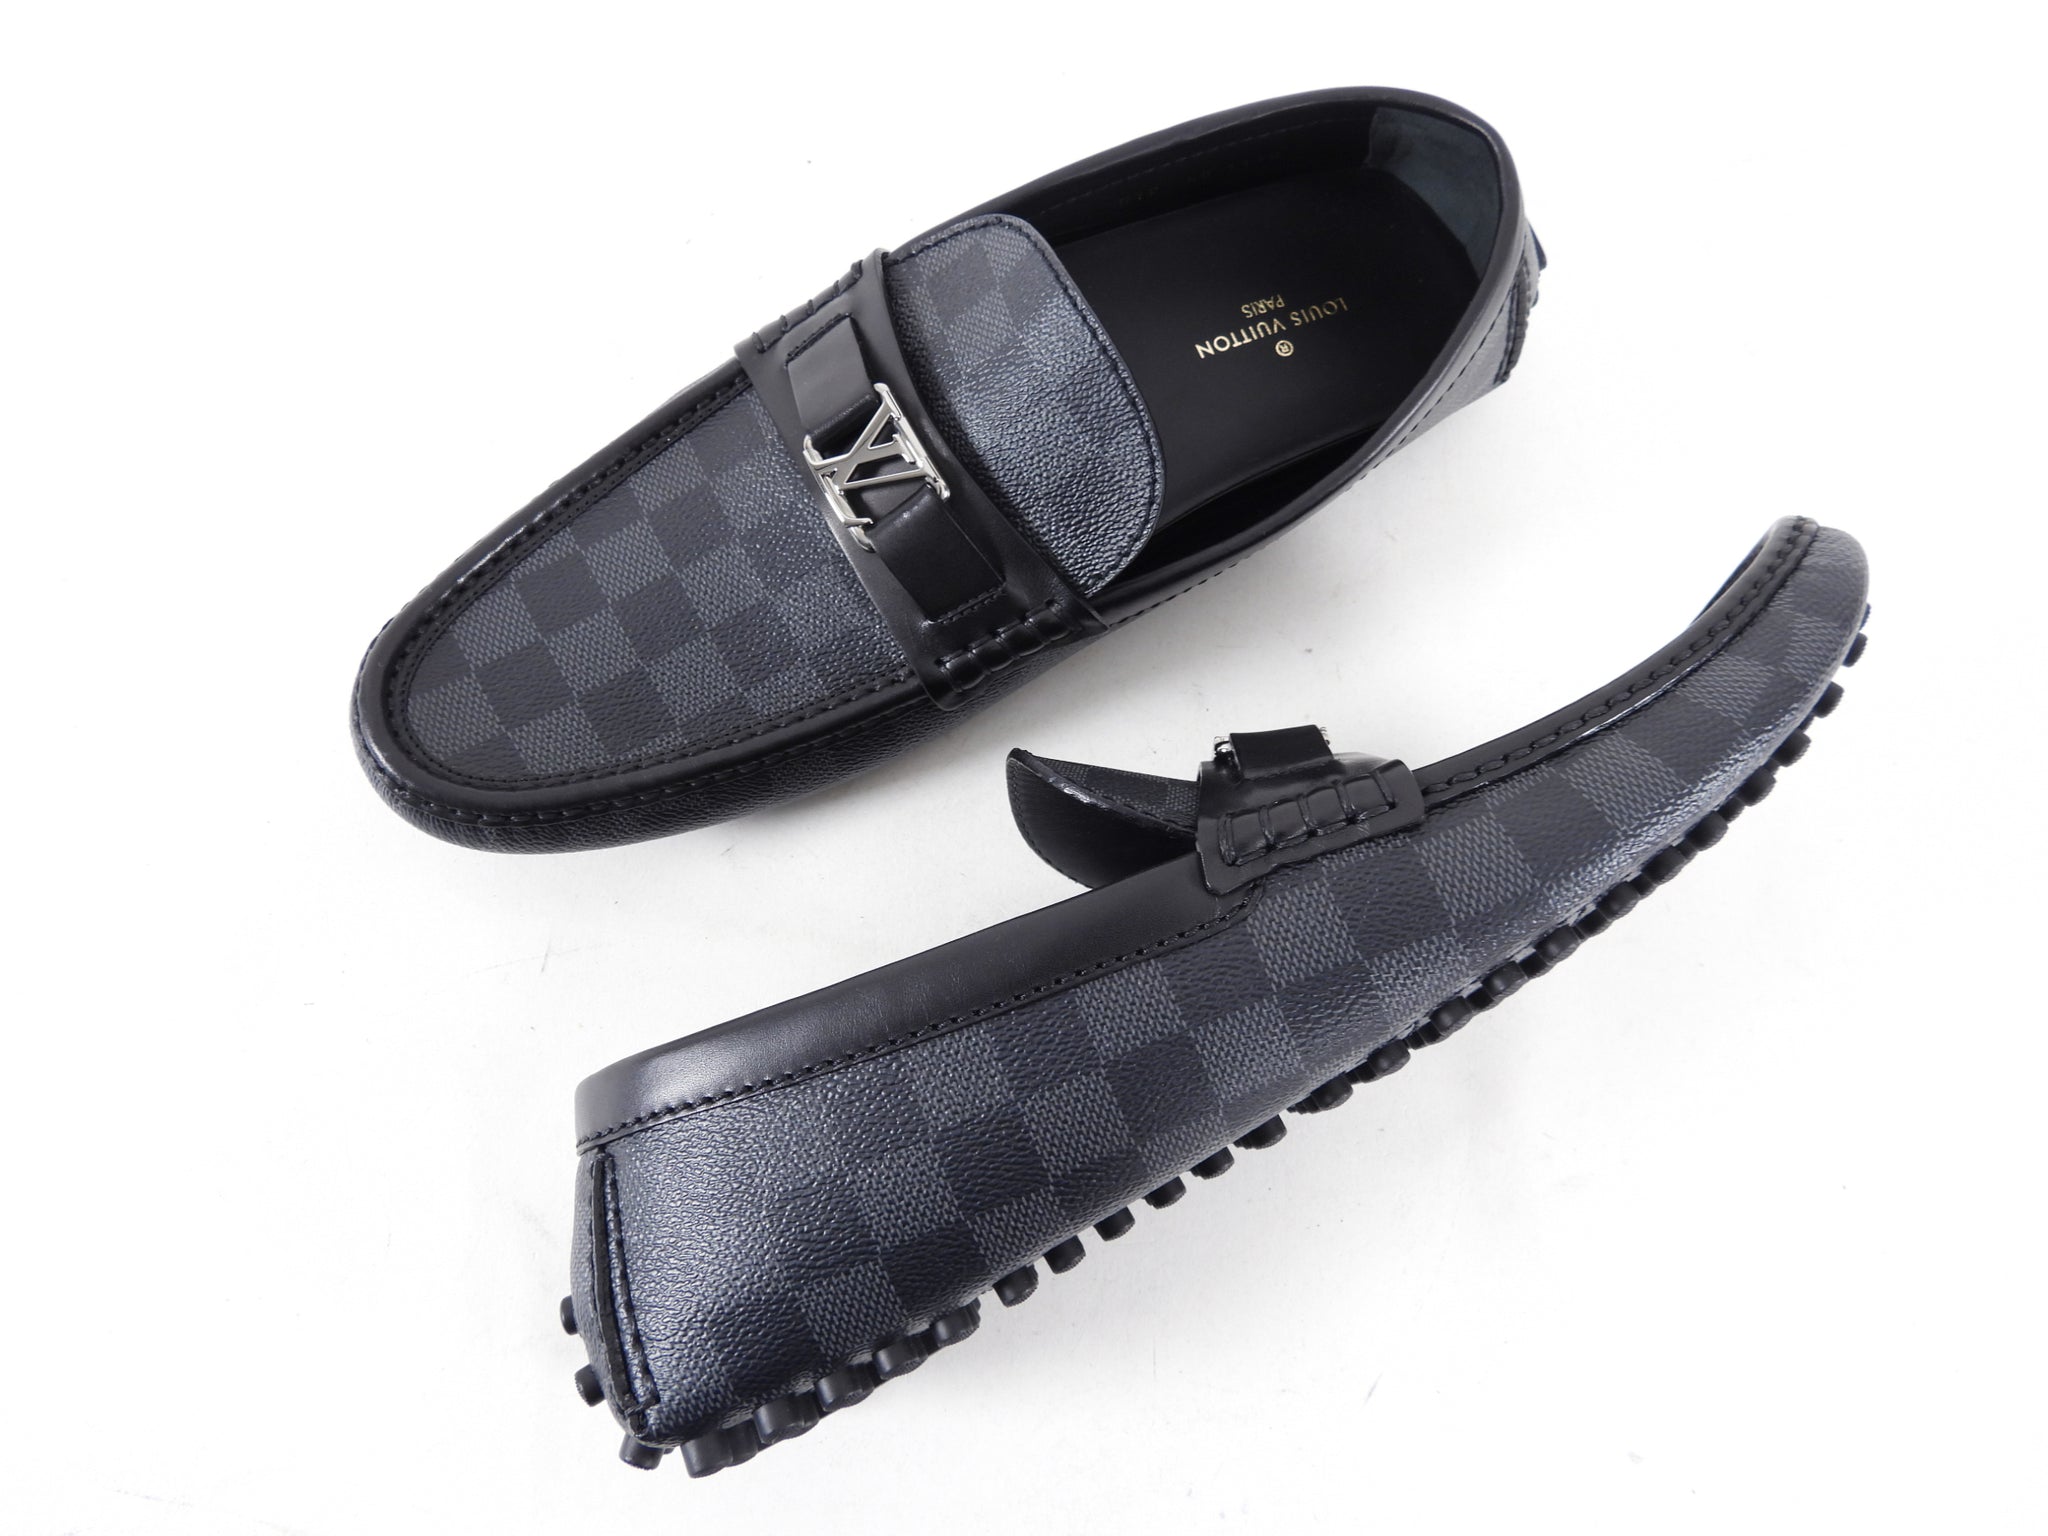 Louis Vuitton Hockenheim Moccasin BLACK. Size 09.5